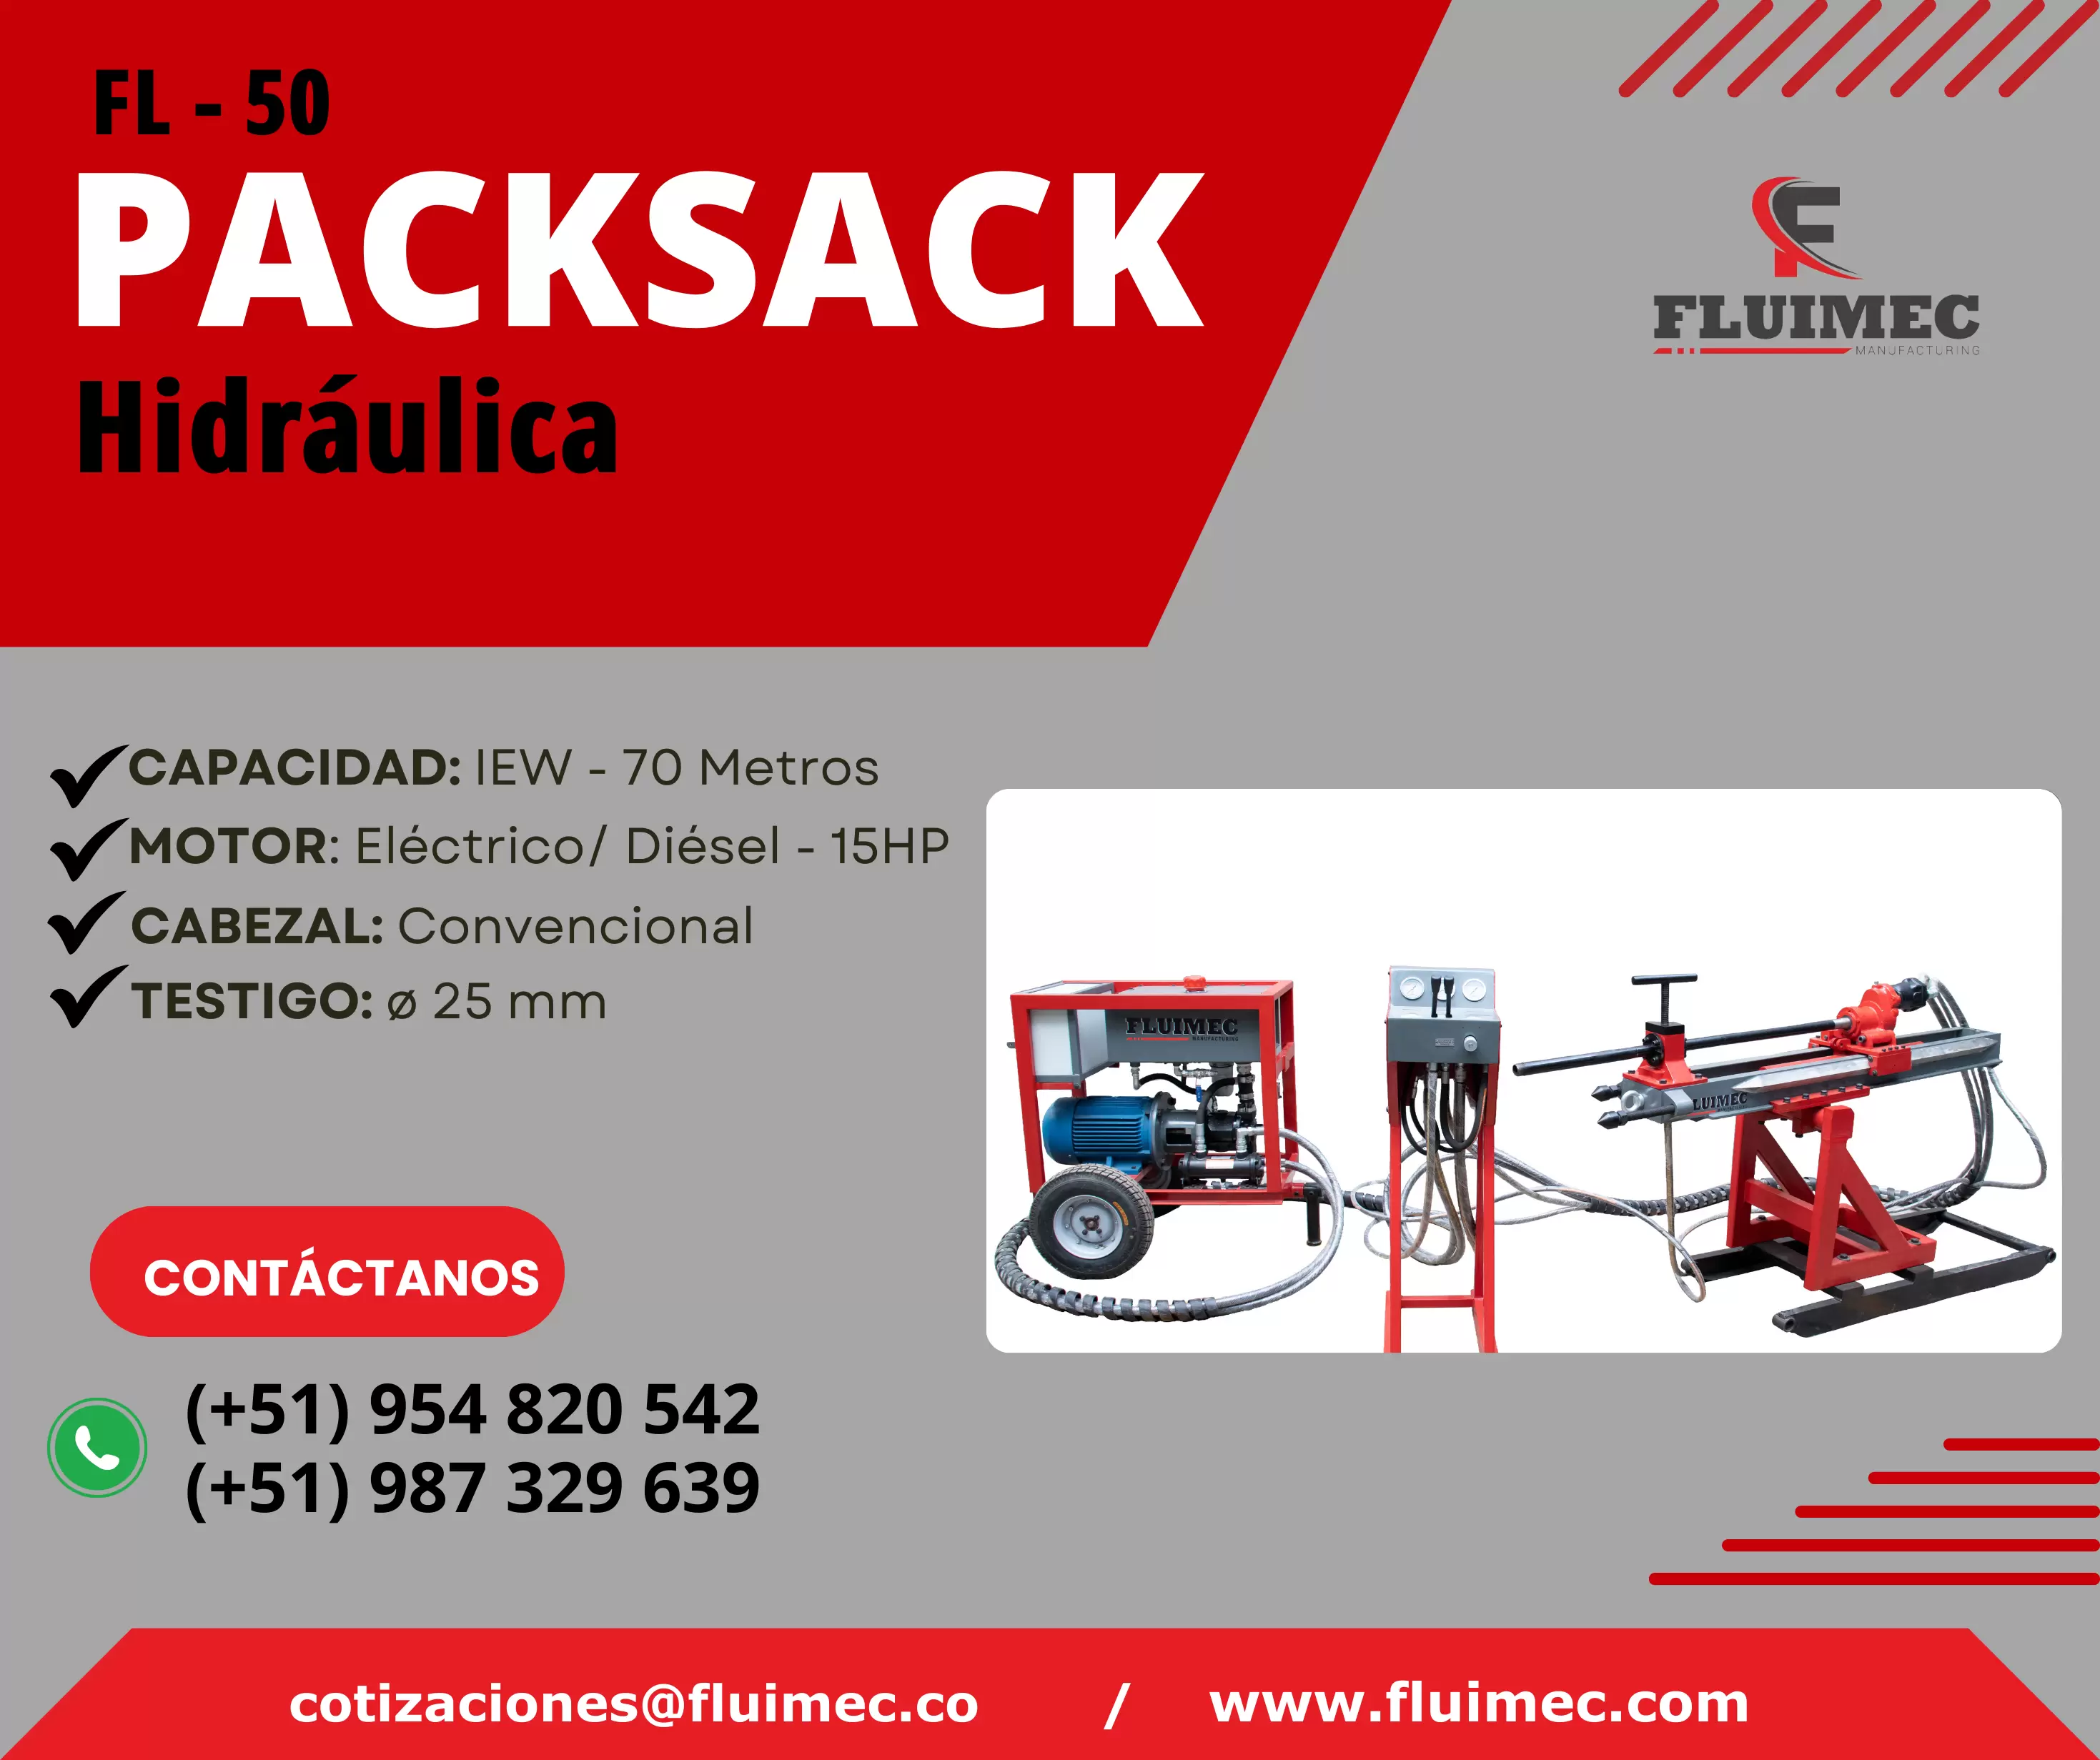 Packsack FL-50 Perforadora hidraulica para proyectos mineros